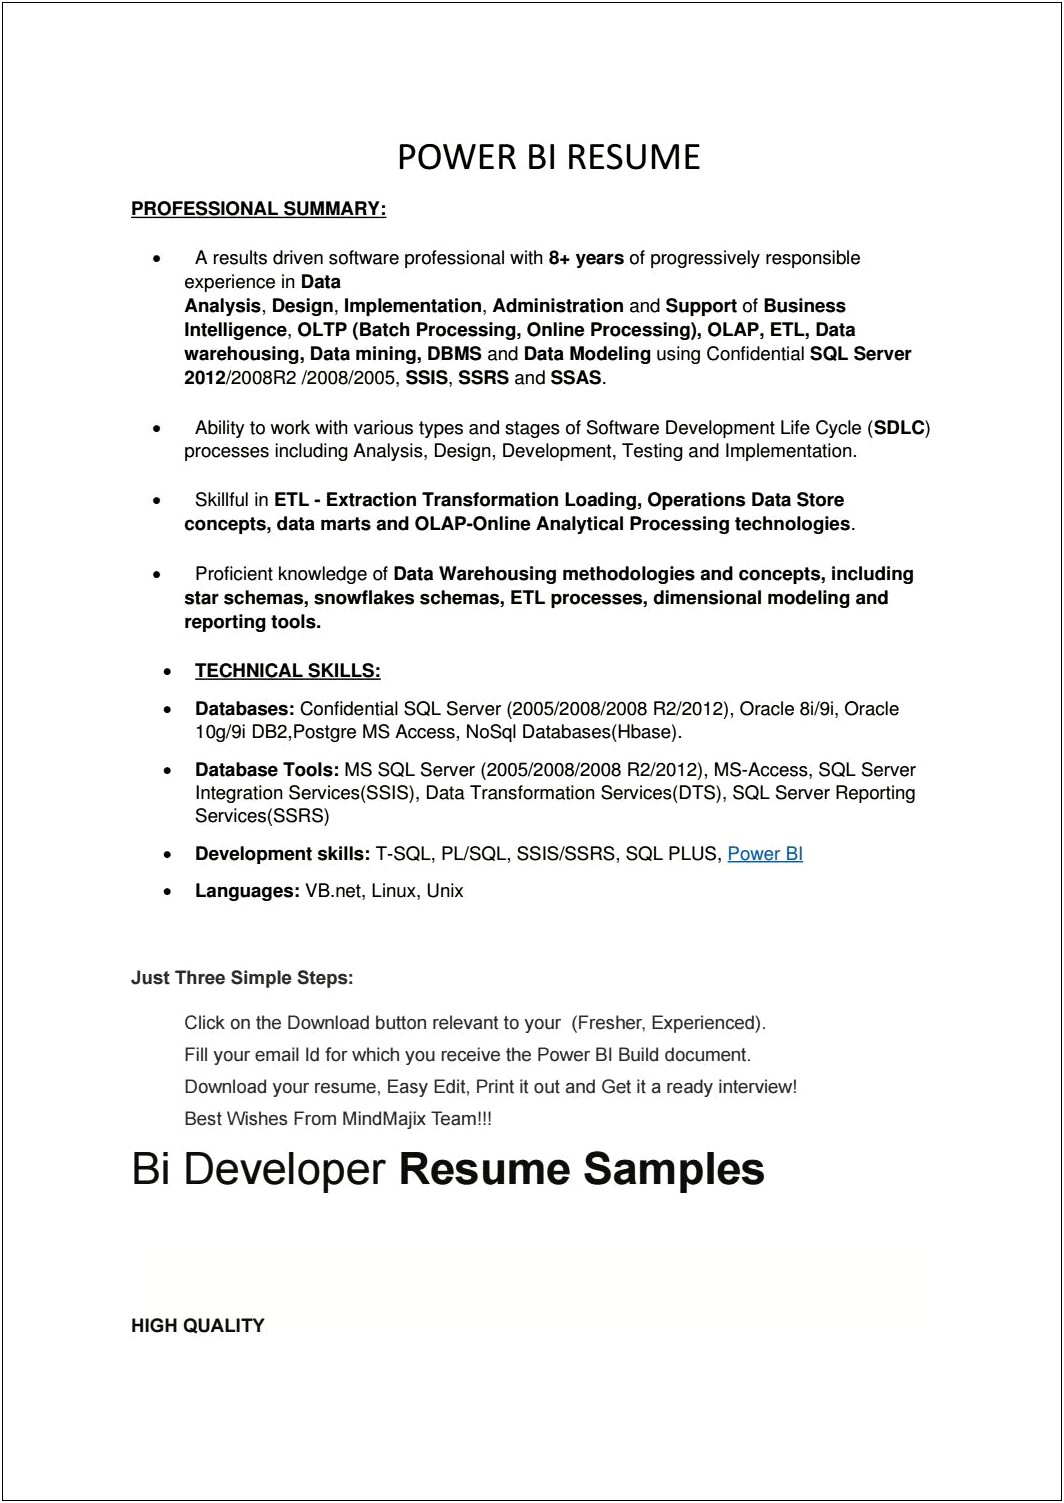 Bi And Data Warehouse Summary For Resume